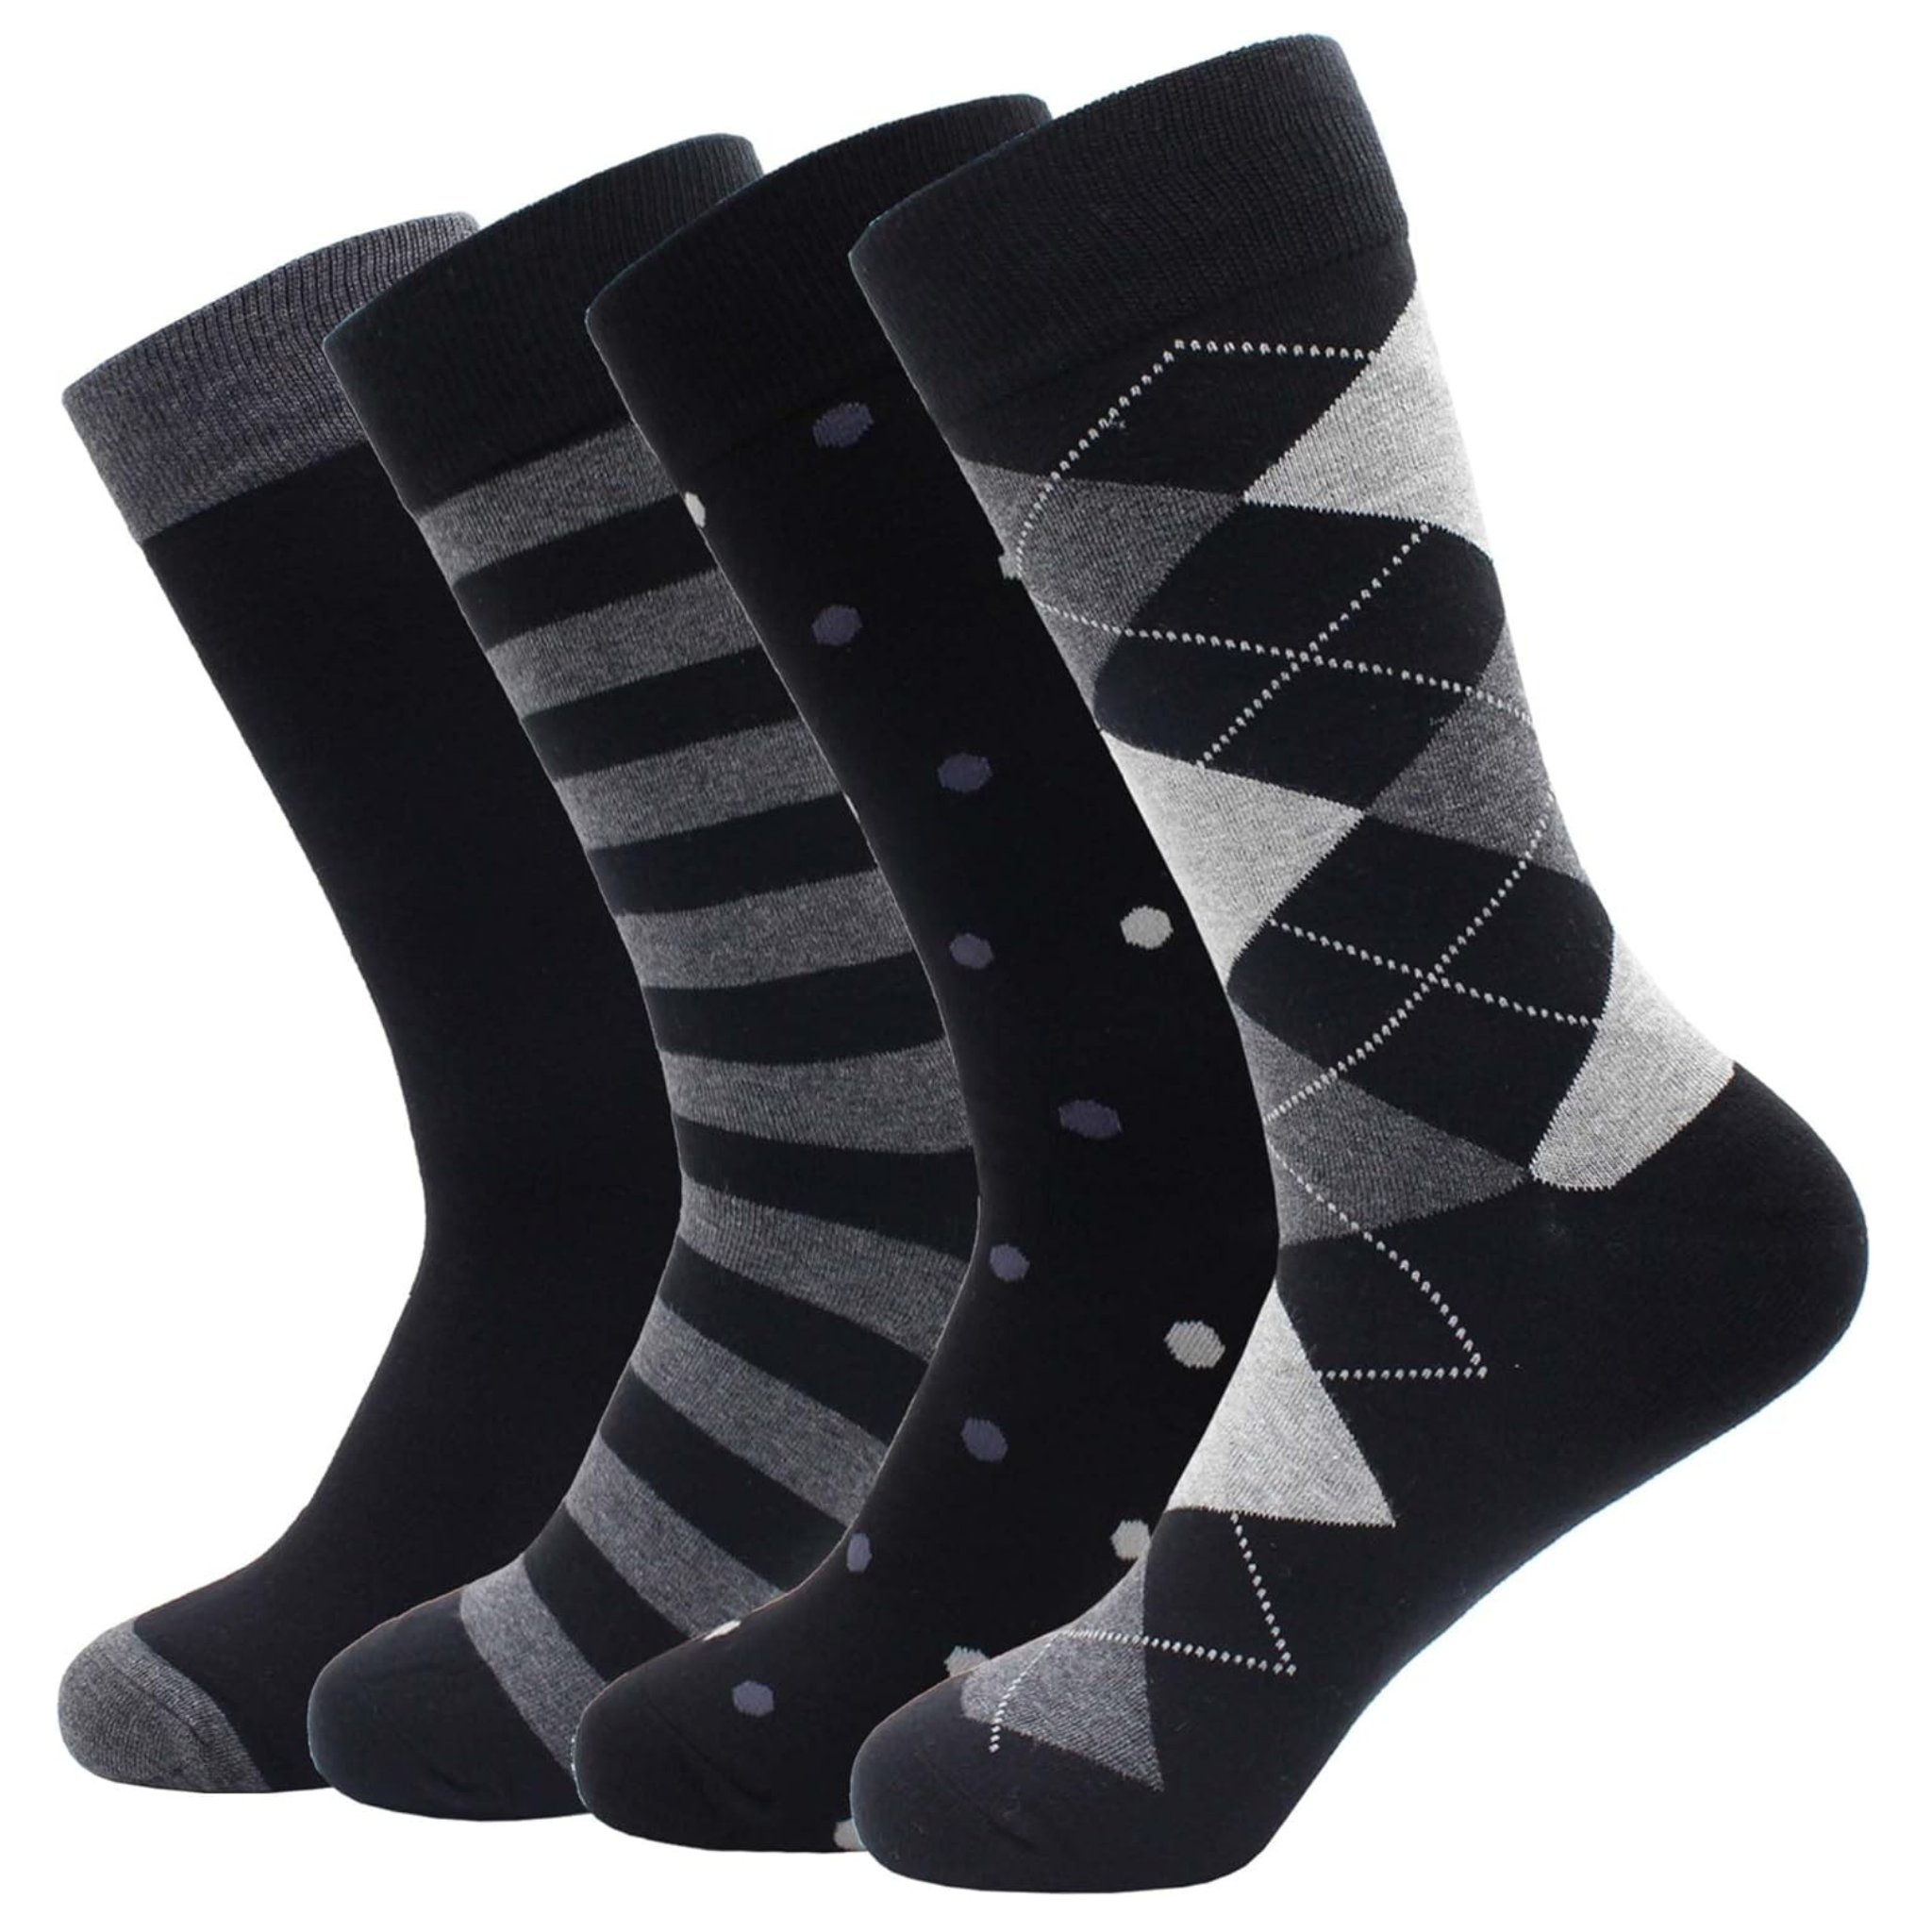 4 Pairs of Men’s Dress Socks